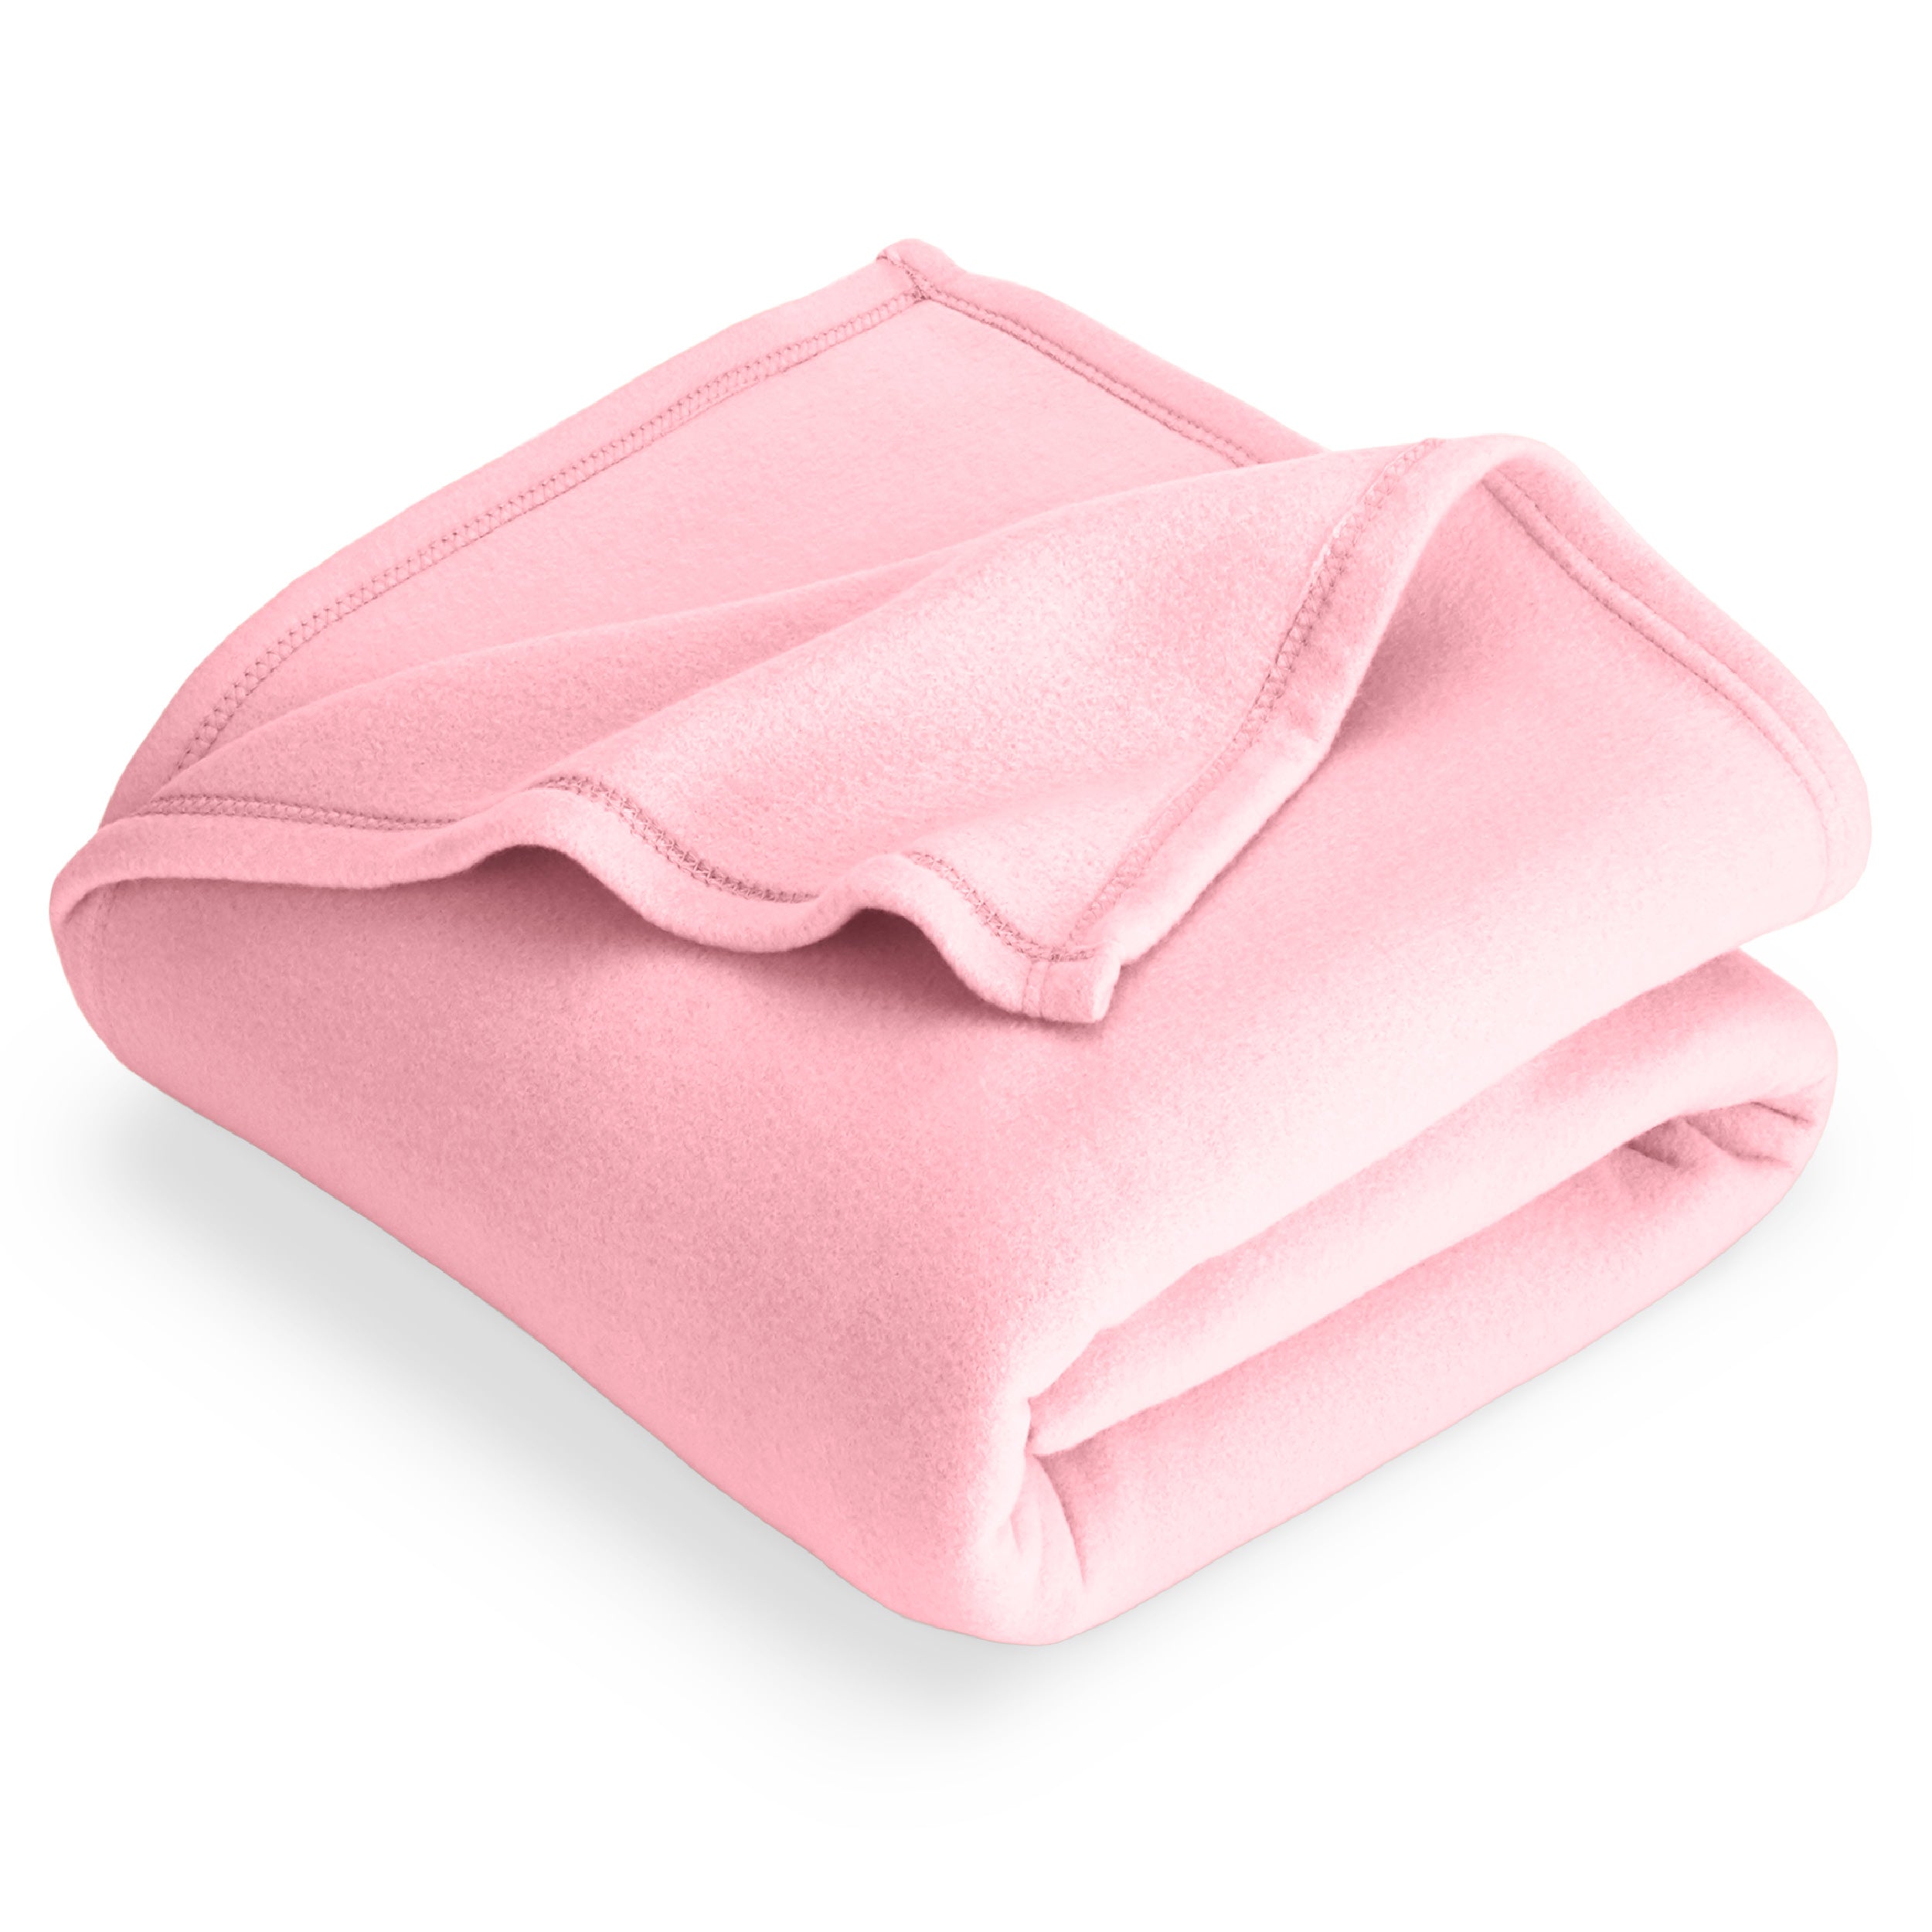 Light pink polar fleece blanket folded with 1 corner folded back